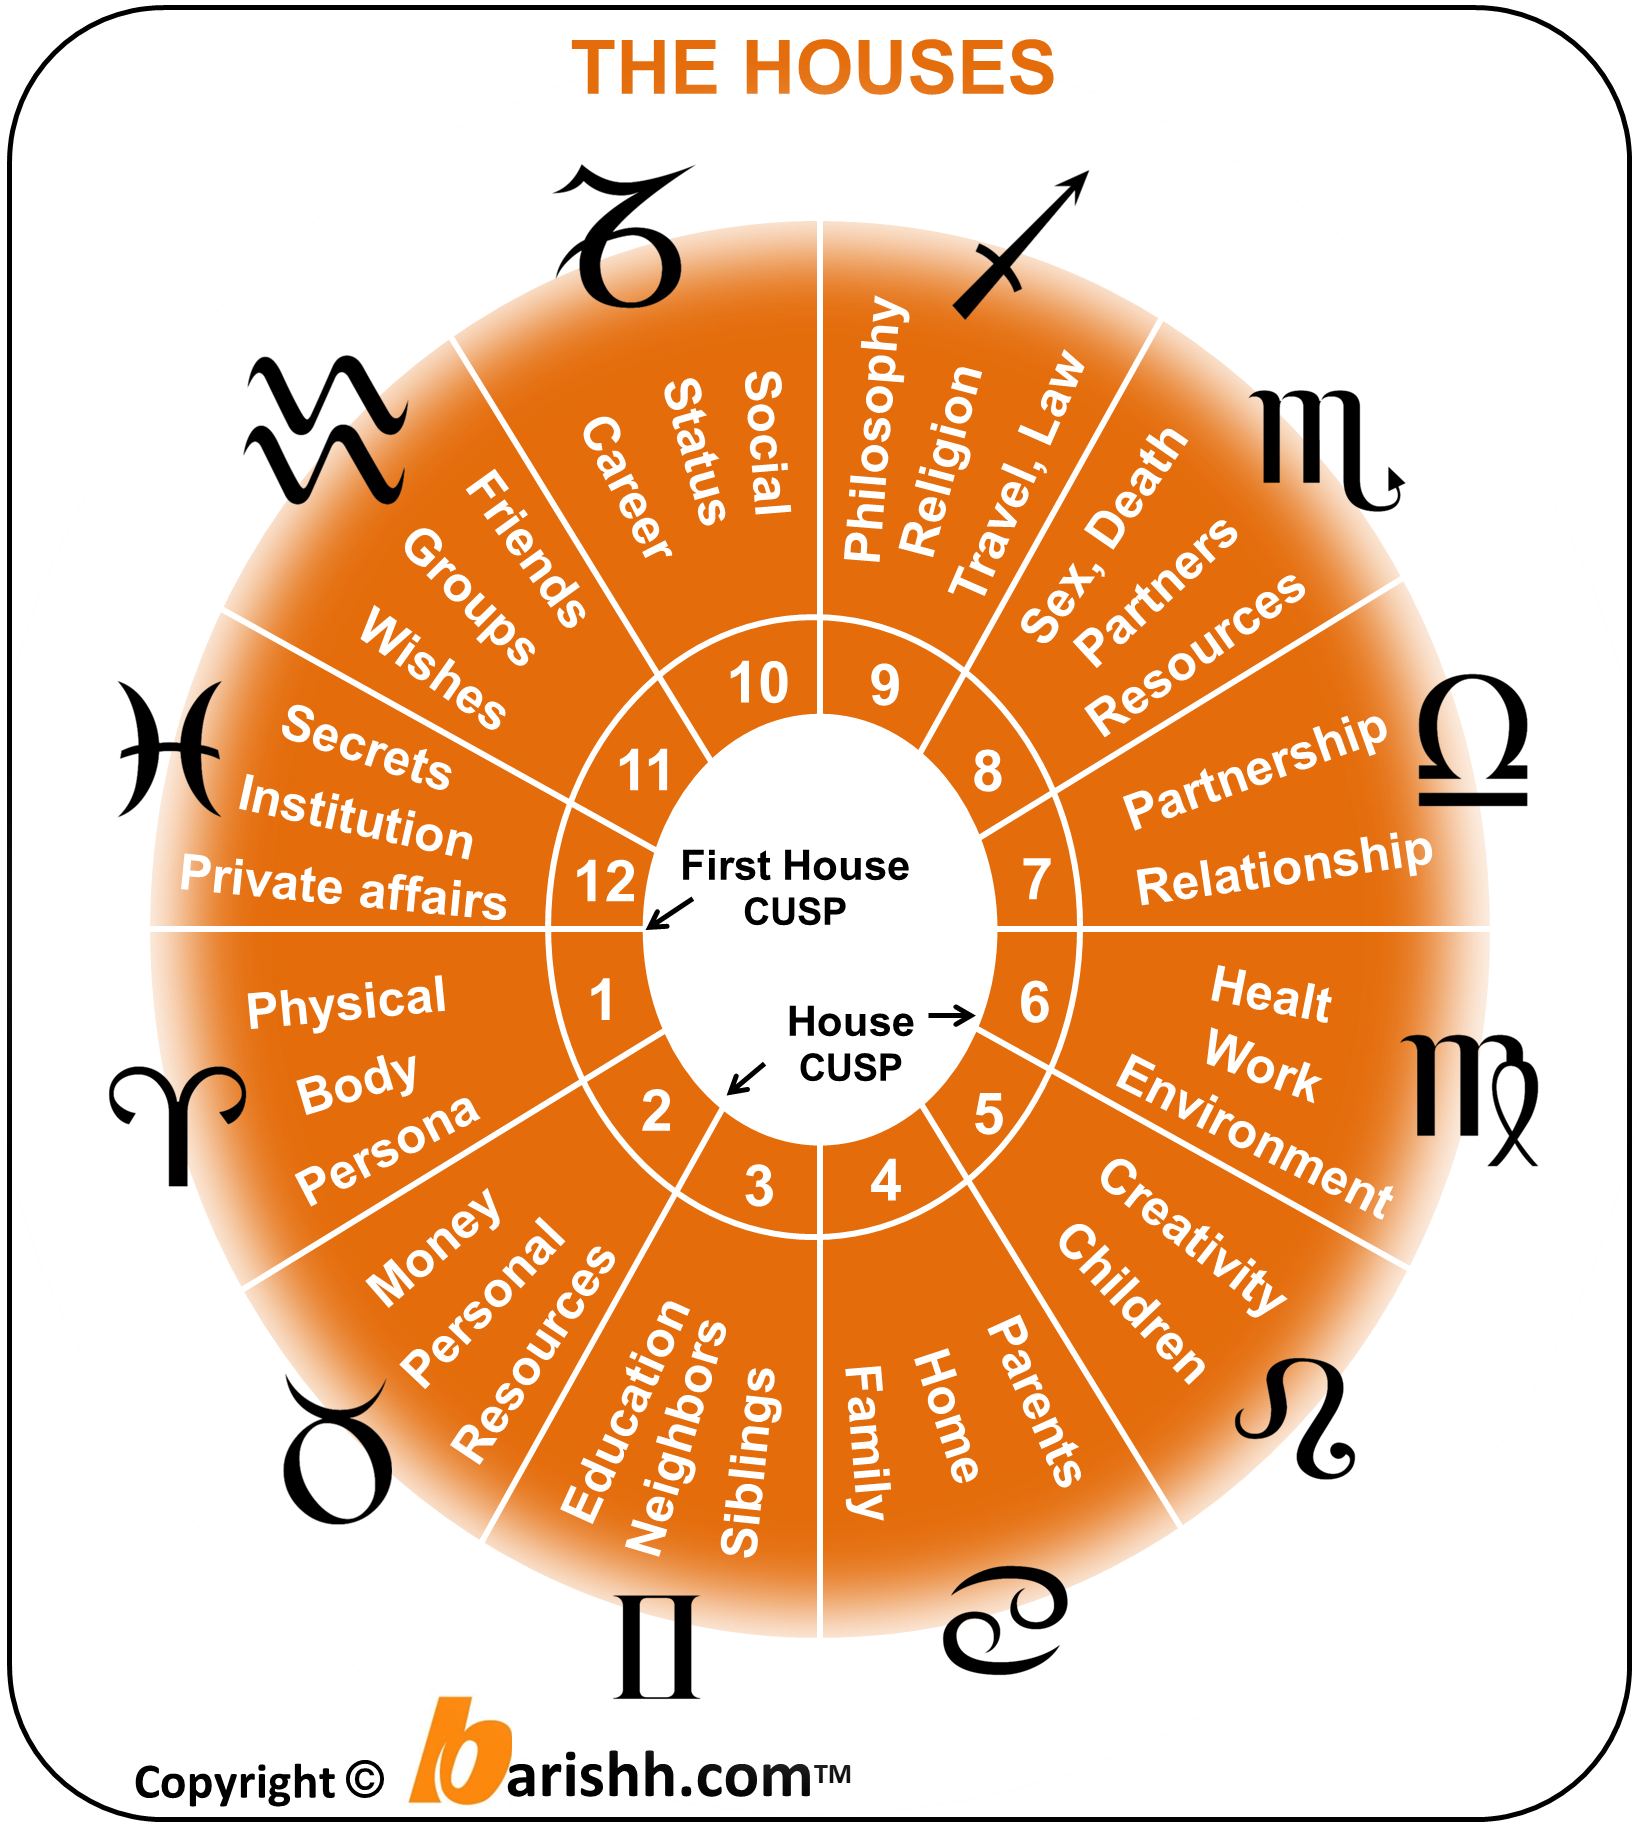 kala vedic astrology software free download